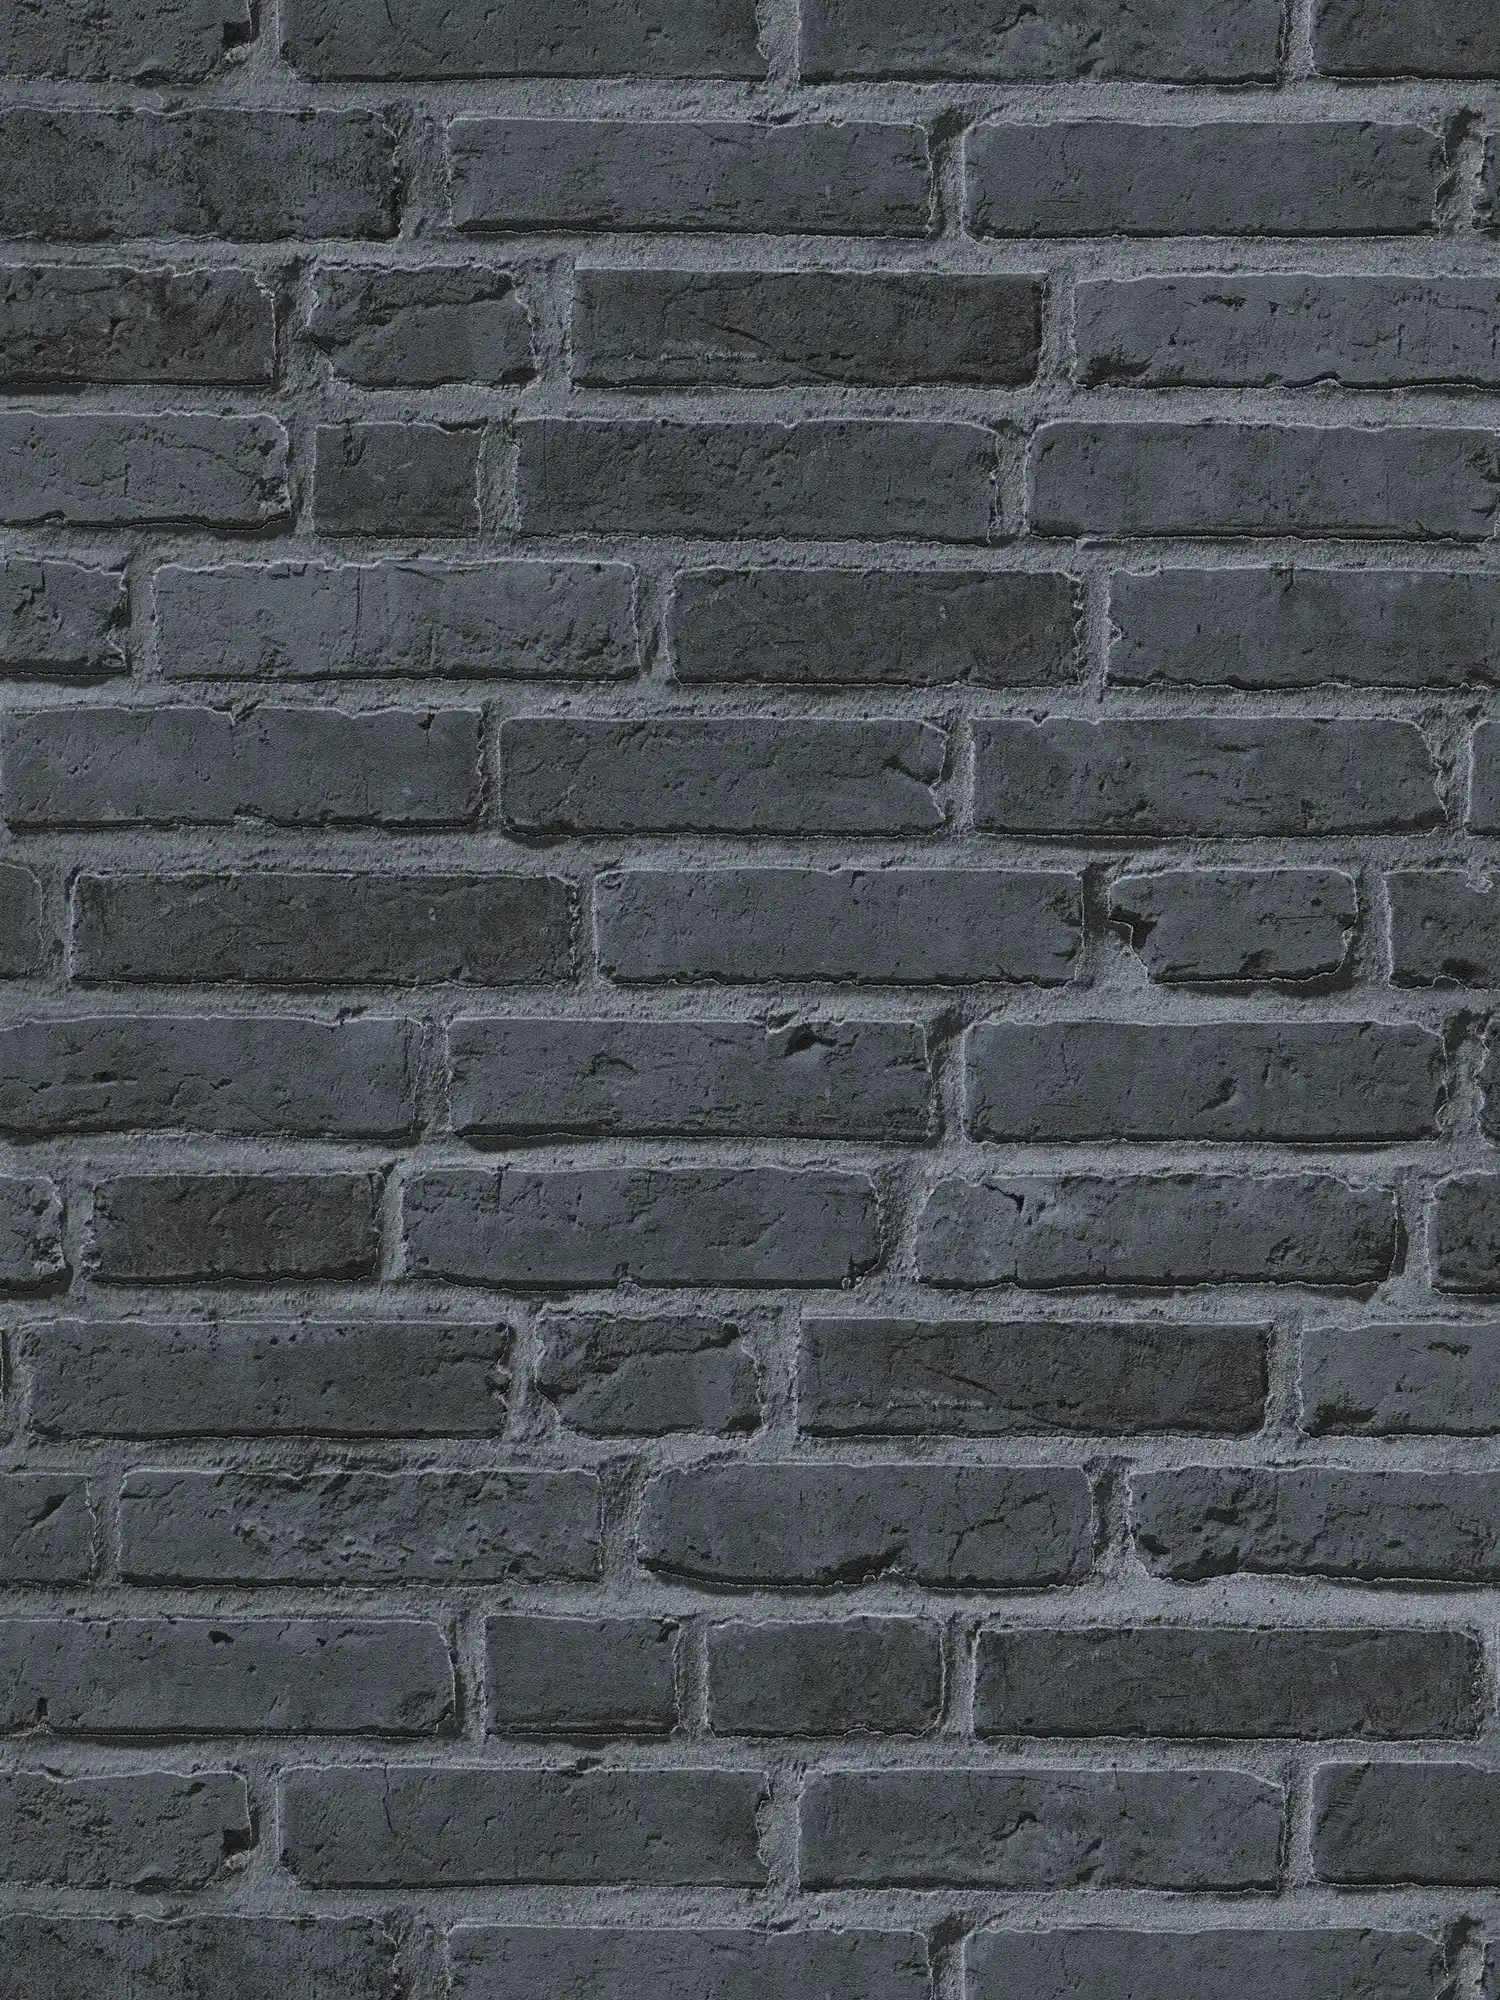         Stone look wallpaper with black bricks - black, grey
    